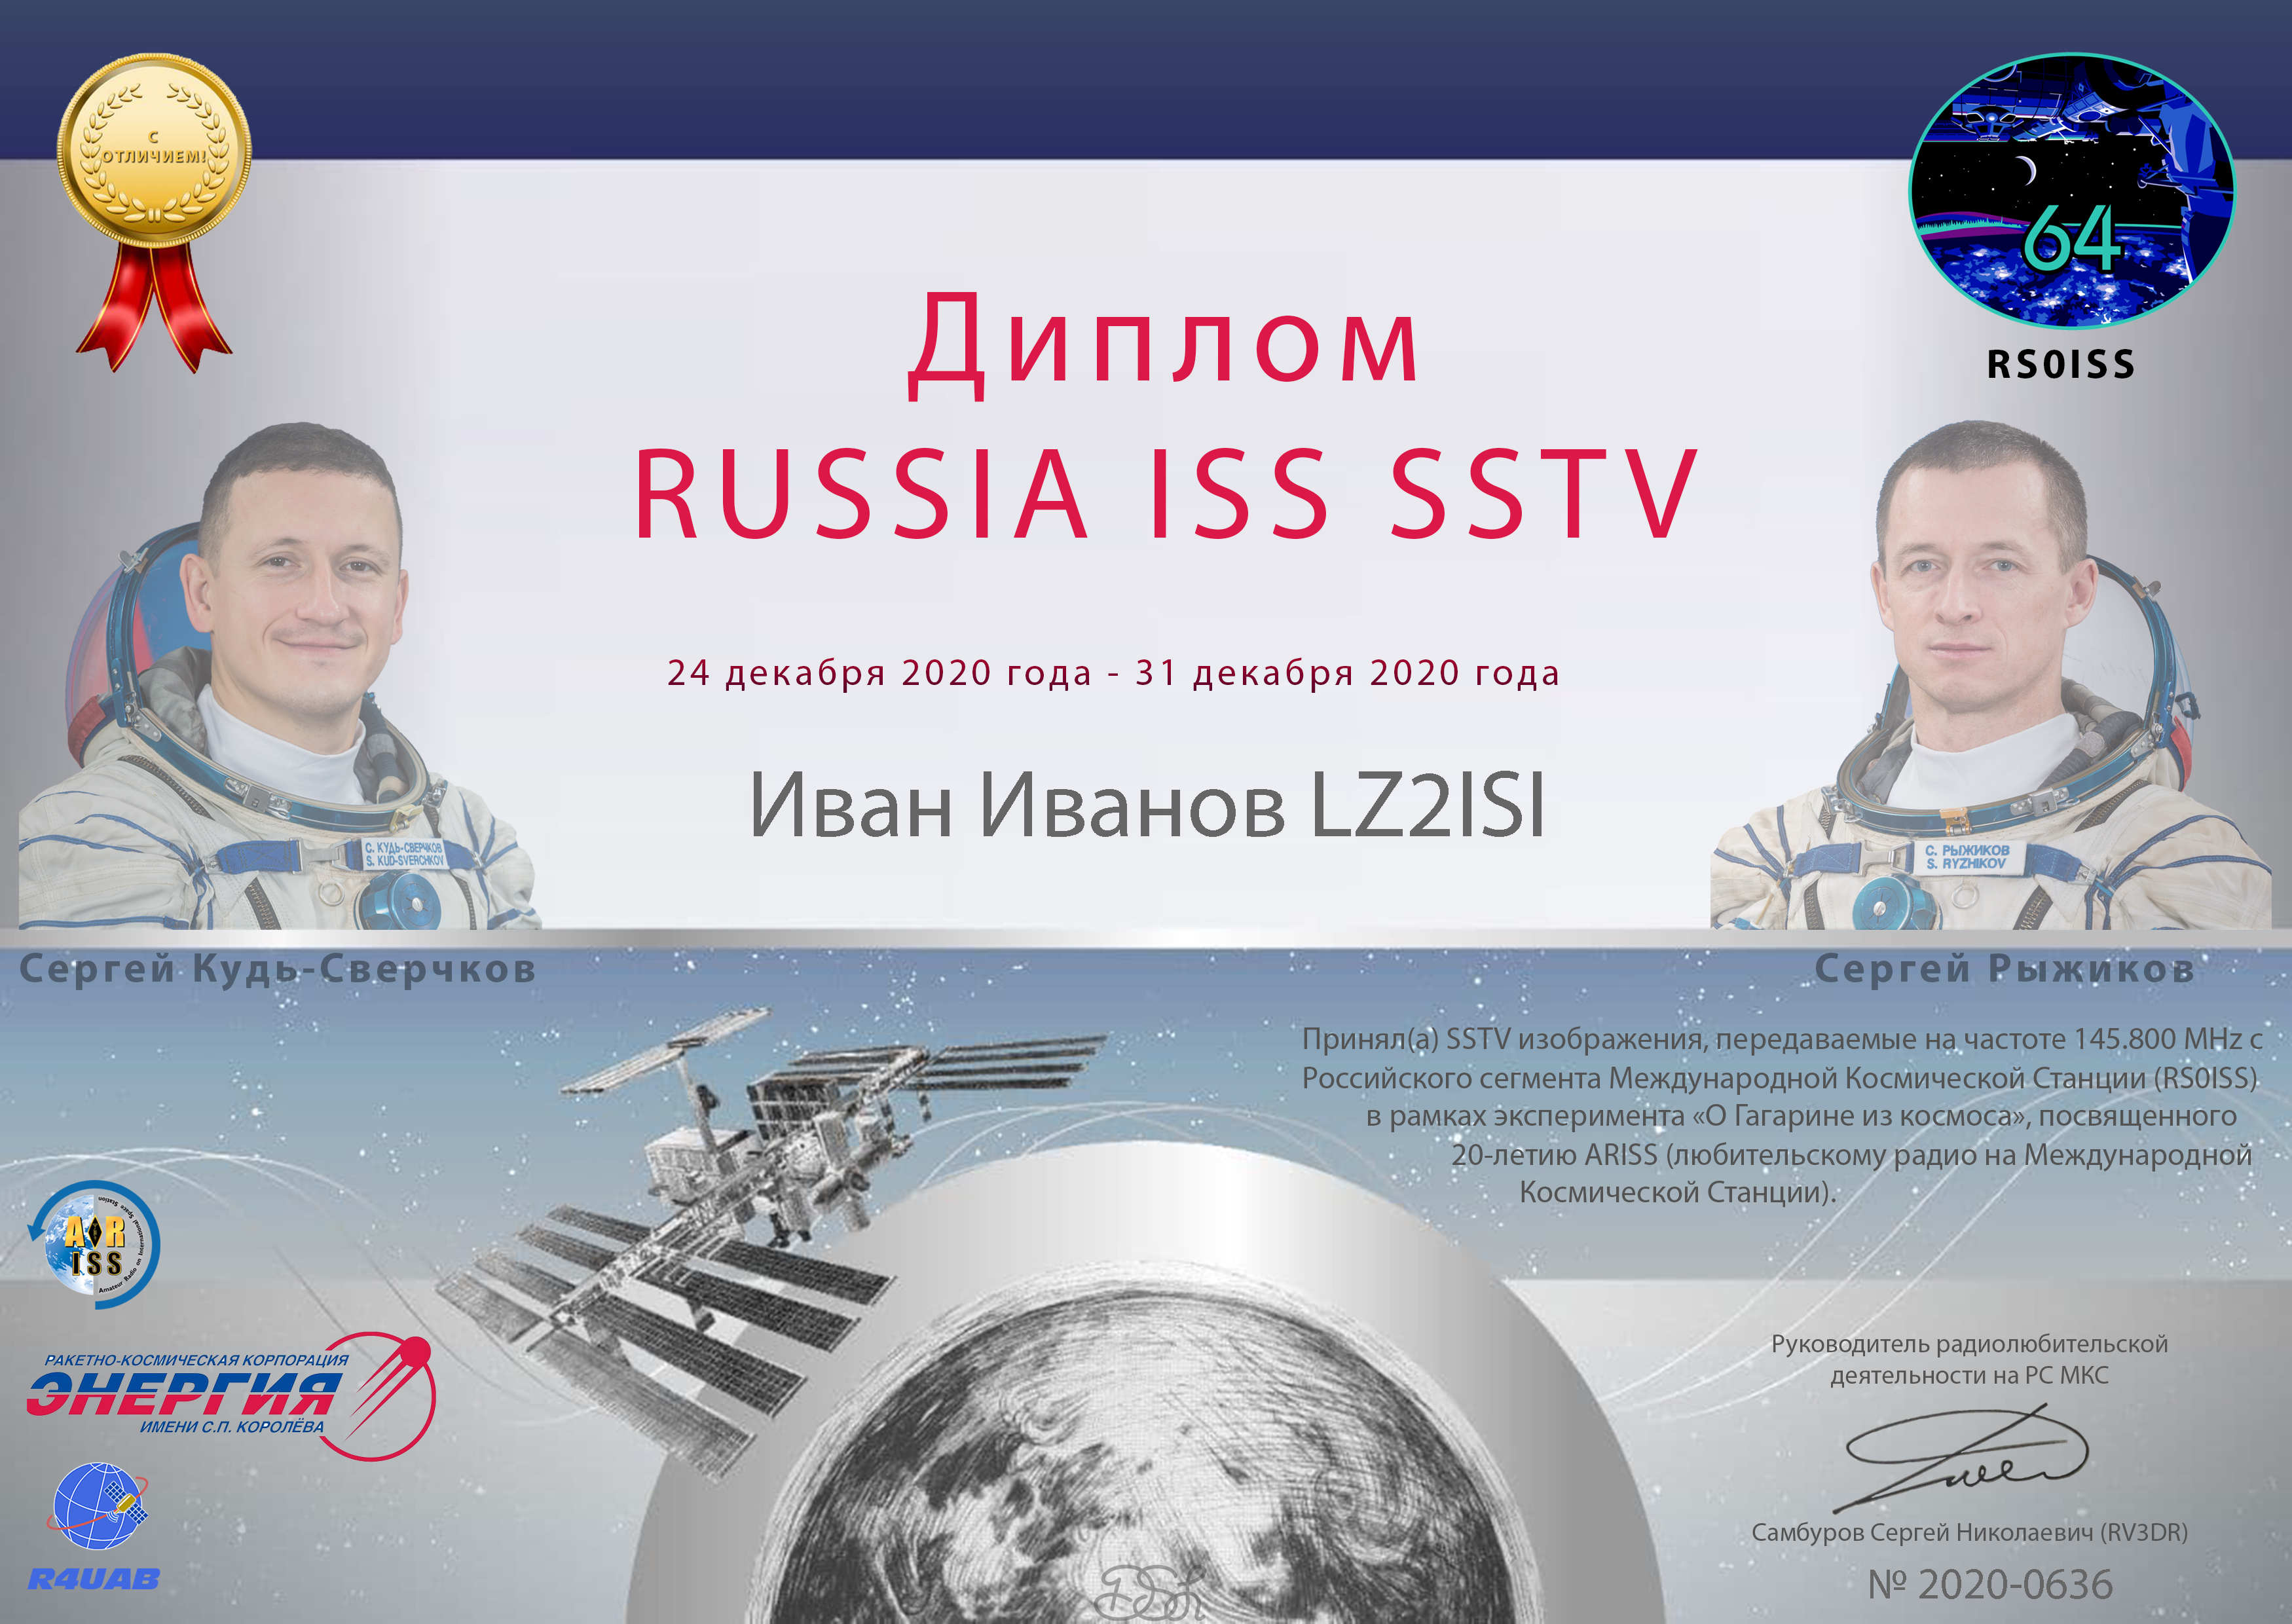 Диплома "Russia ISS SSTV" - LZ2ISI